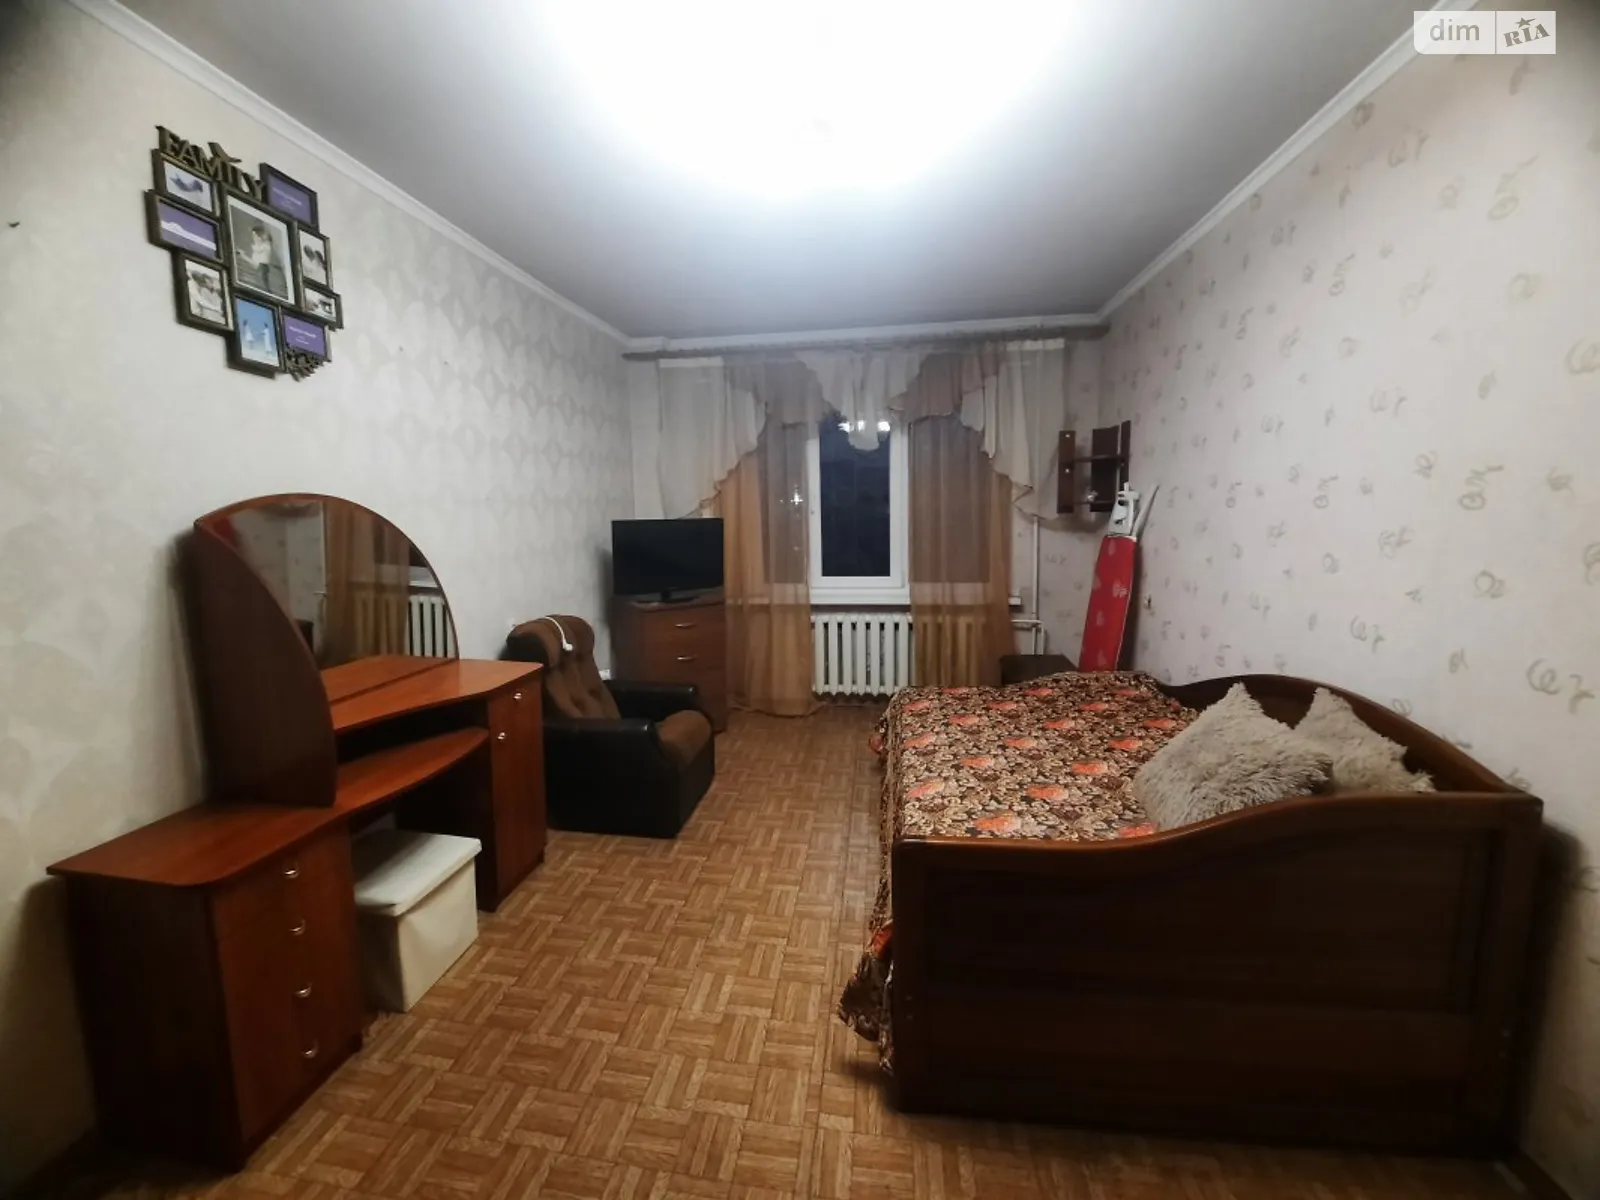 Сдается в аренду 1-комнатная квартира 34 кв. м в Одессе, ул. Академика Королева, 86 - фото 1